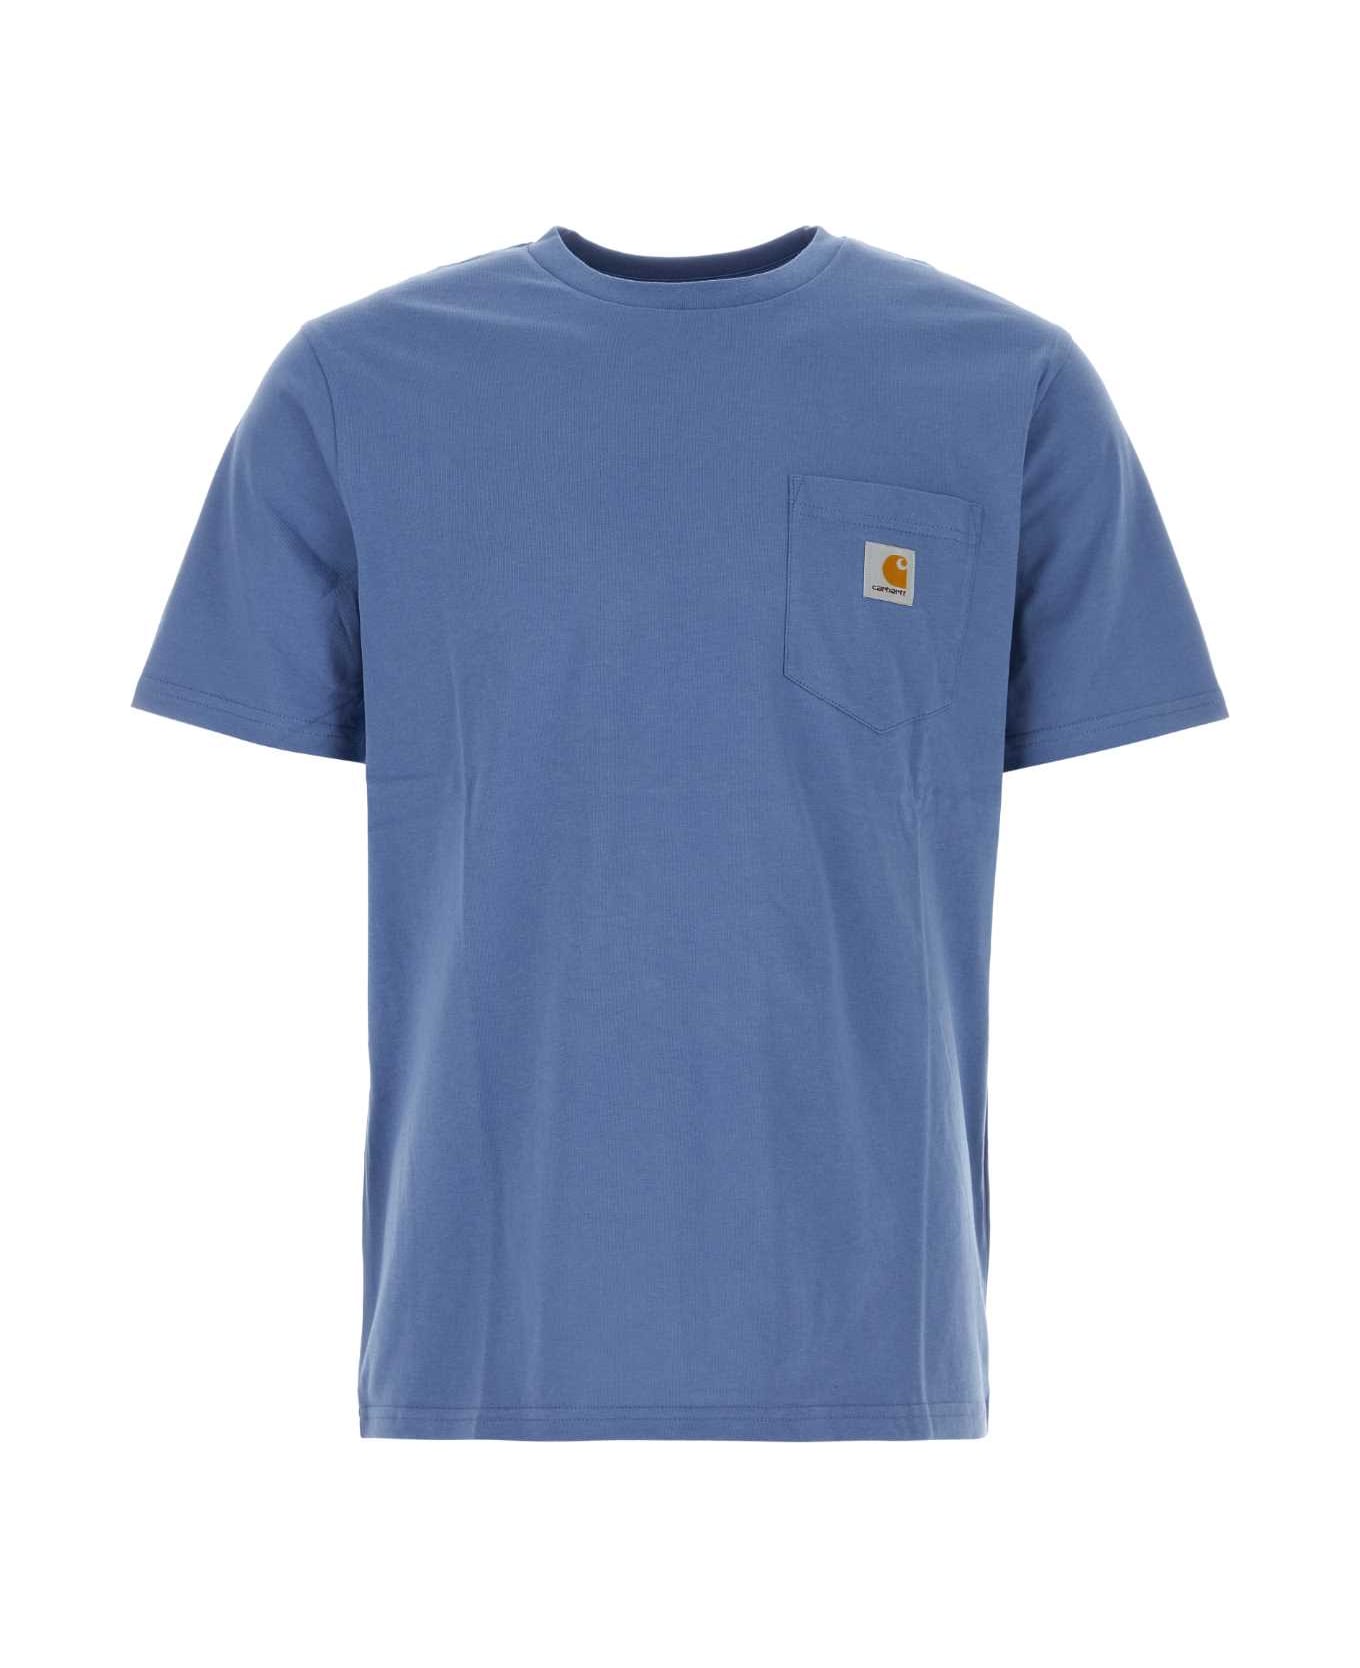 Carhartt Slate Blue Cotton S/s Pocket T-shirt - SORRENT